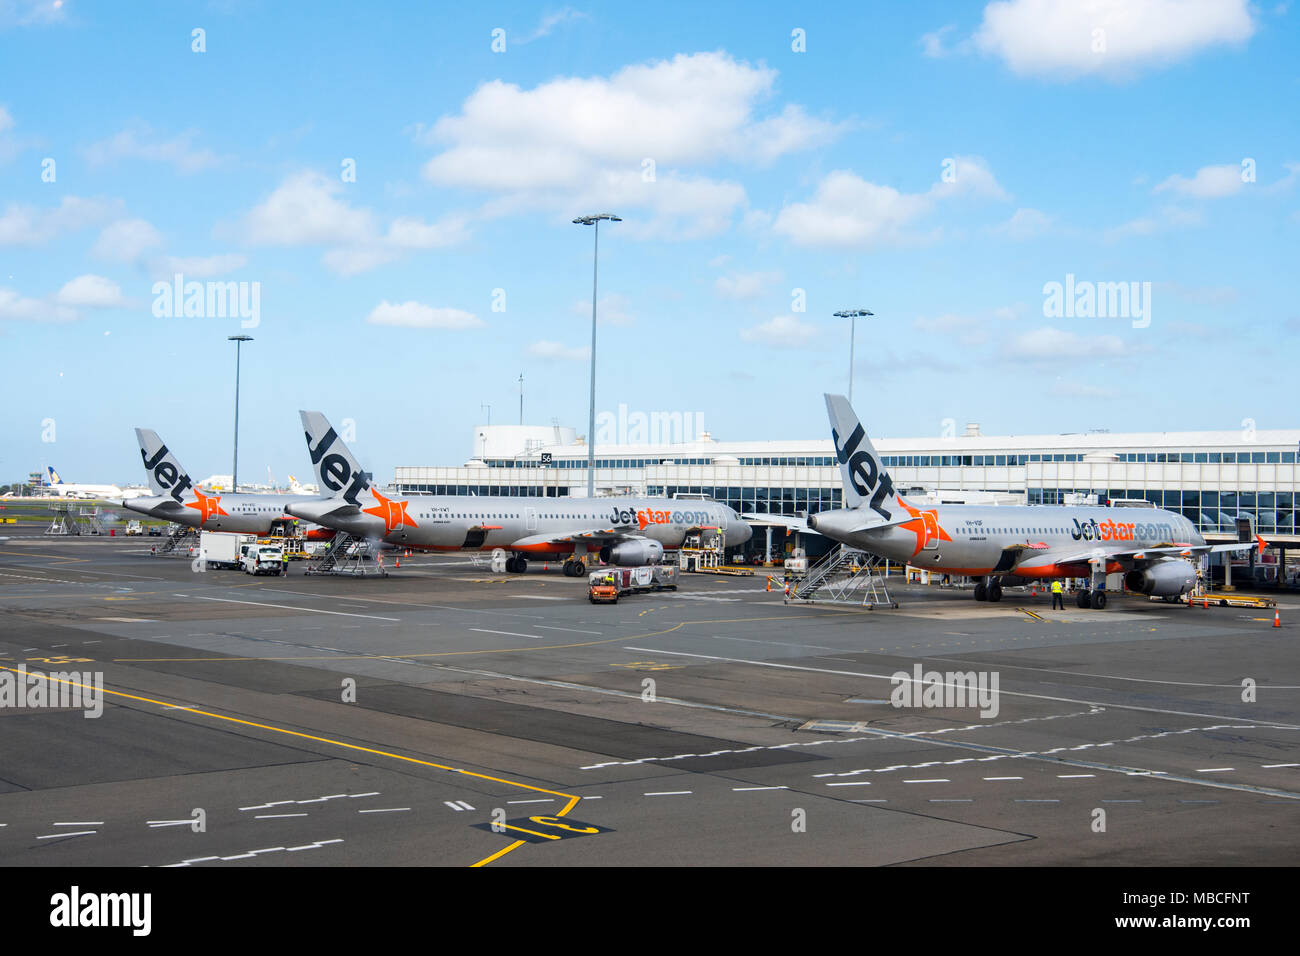 Jetstar fleet of Airbus A320 aircrafts at Sydney airport, domestic terminal, Australia Stock Photo